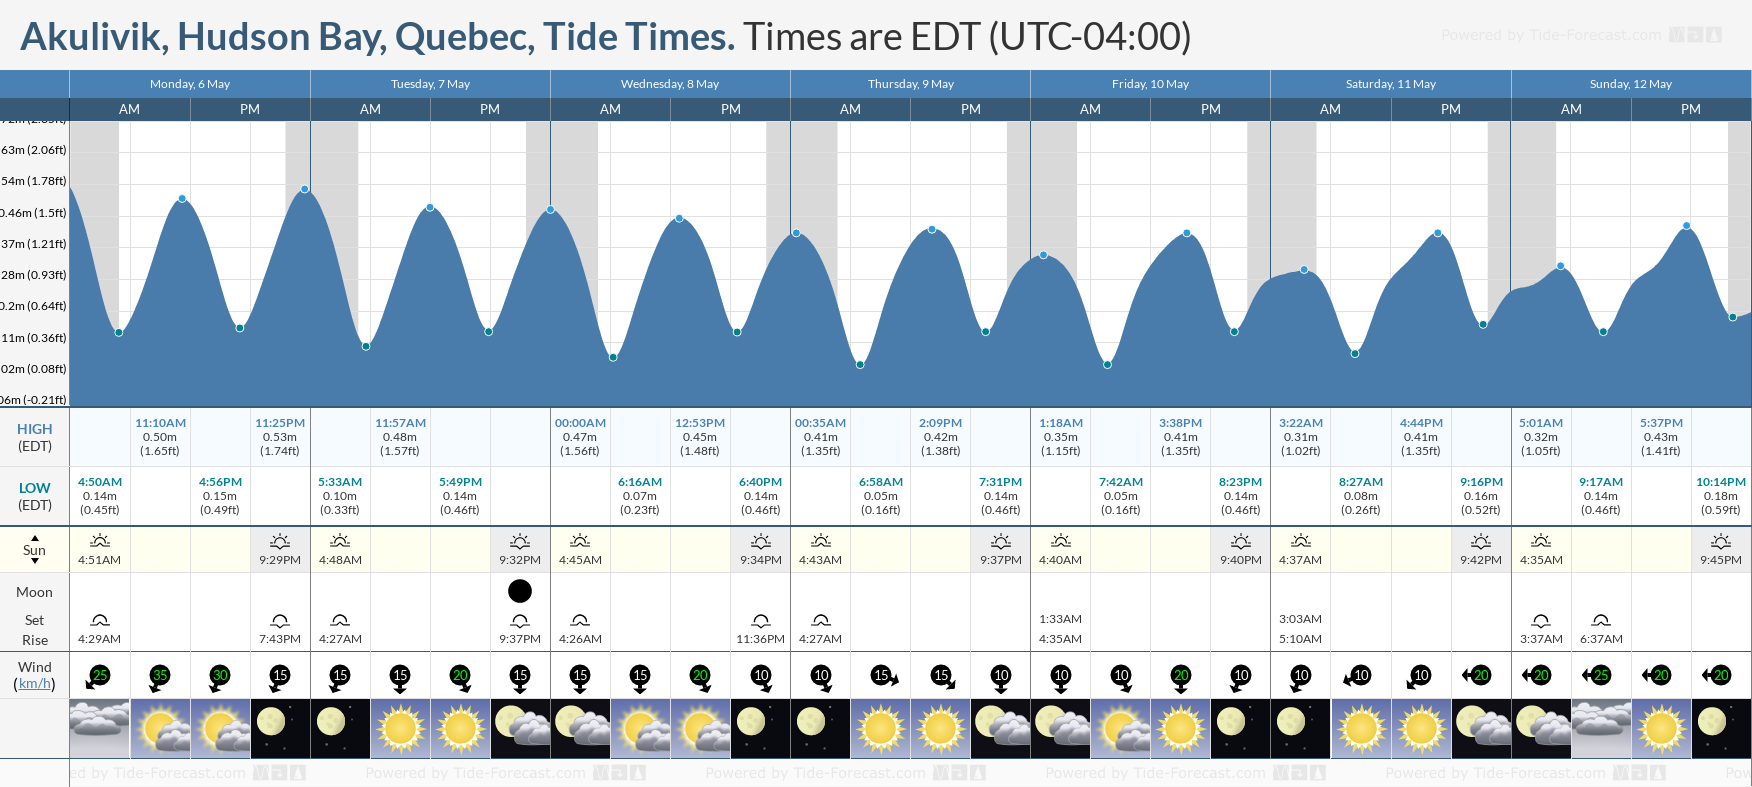 Akulivik, Hudson Bay, Quebec Tide Chart including high and low tide tide times for the next 7 days